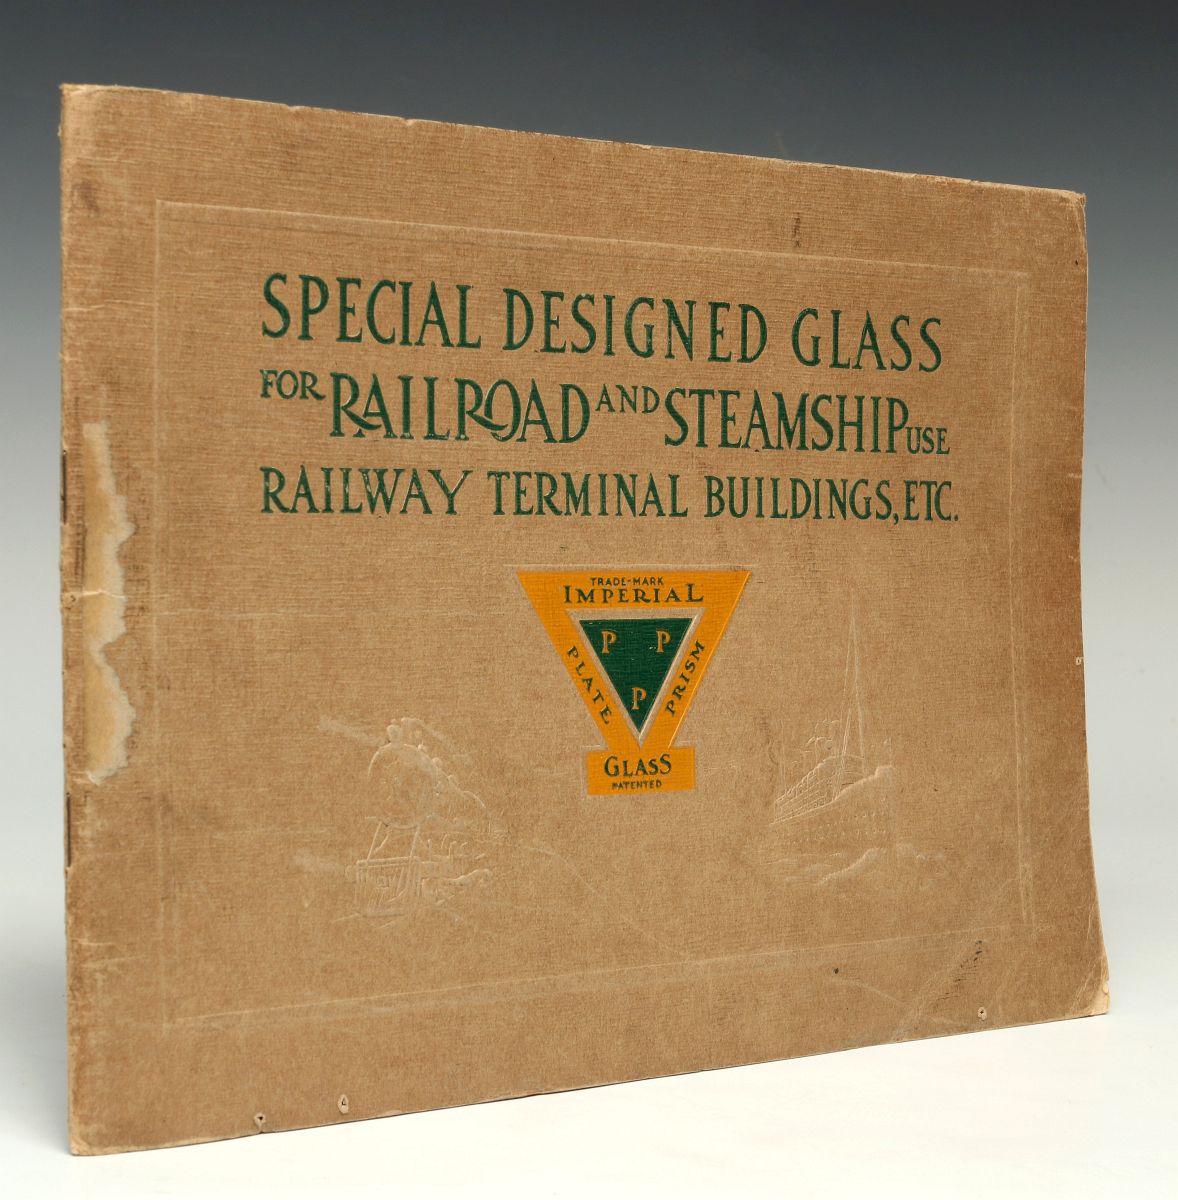 IMPERIAL RAILROAD & STEAMSHIP GLASS CATALOG, 1912